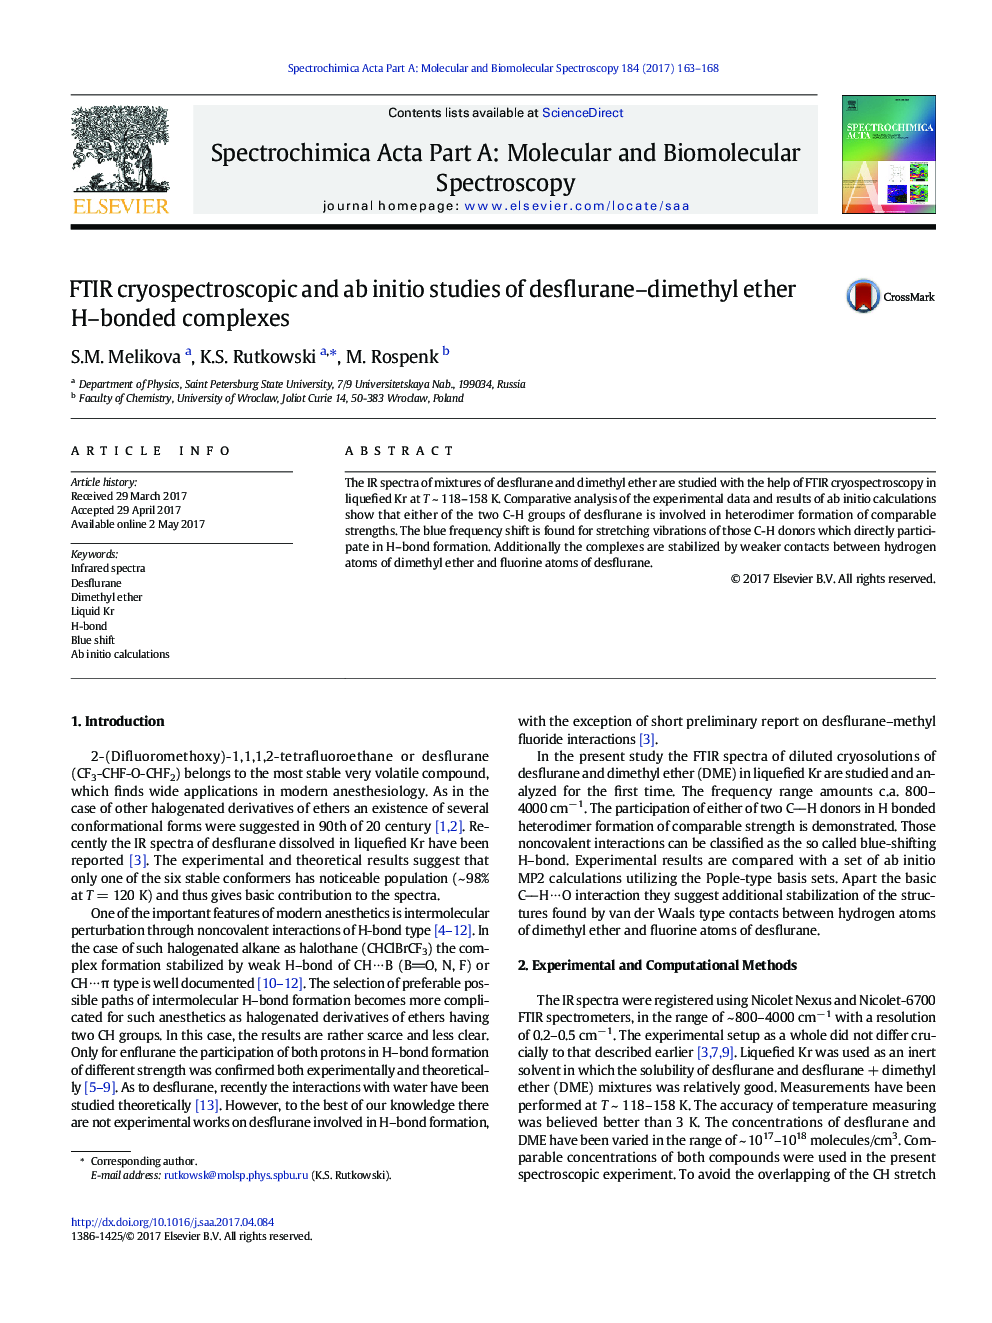 FTIR cryospectroscopic and ab initio studies of desflurane-dimethyl ether H-bonded complexes